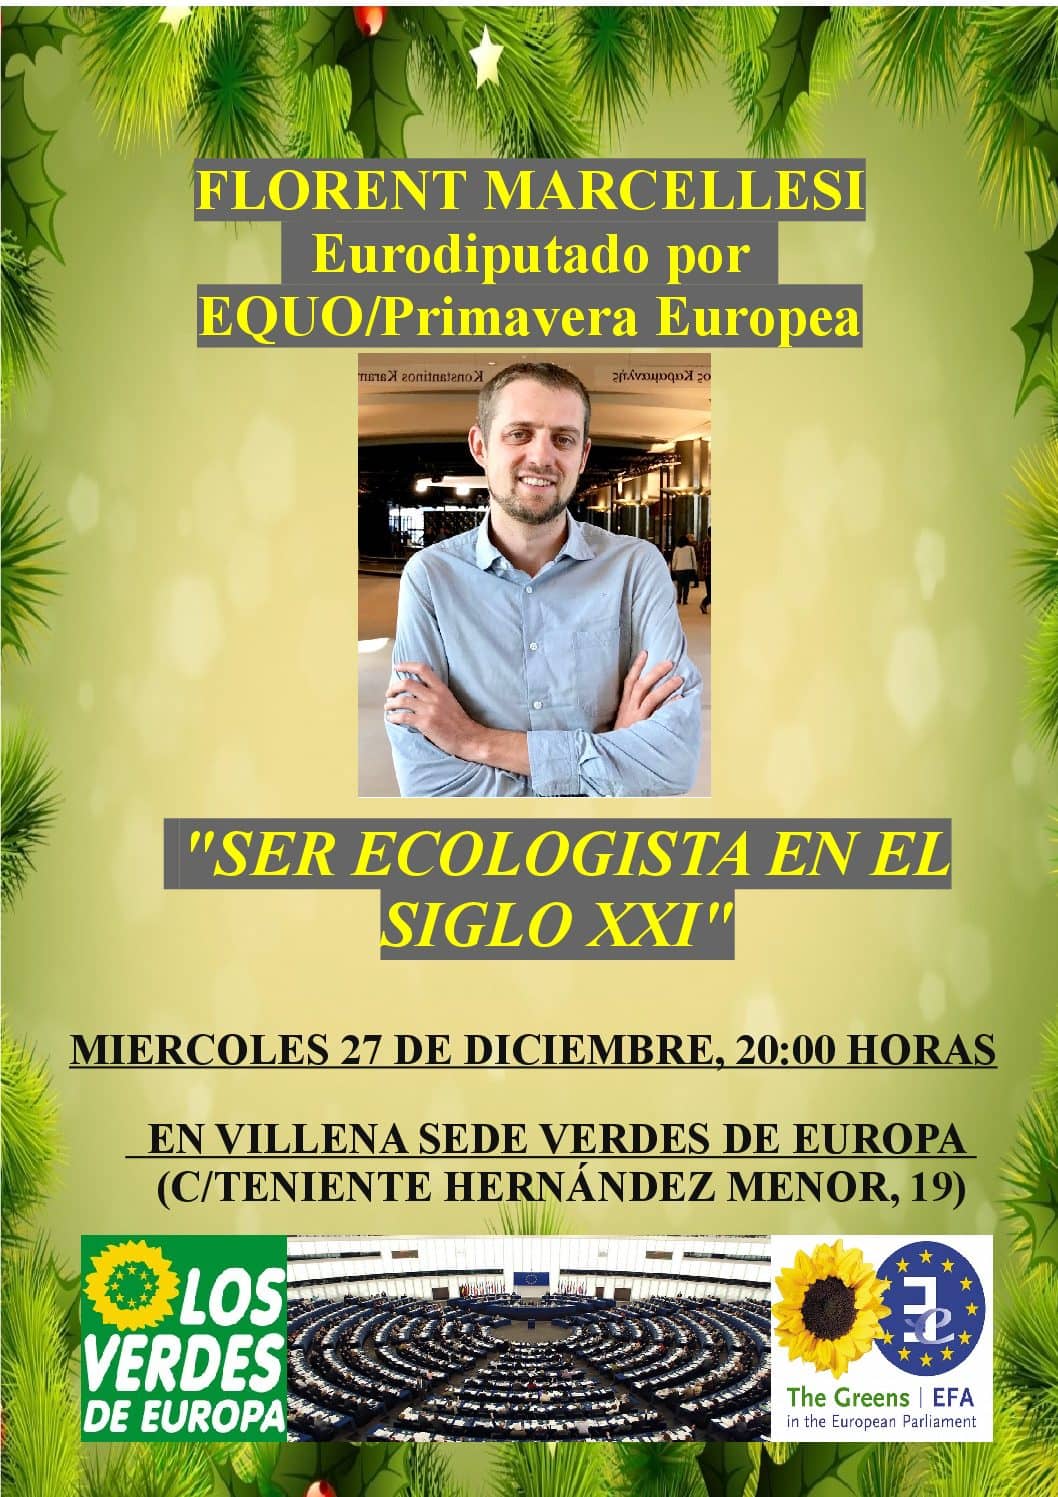 Conferencia del Eurodiputado Florent Marcellesi: Ser ecologista en el siglo XXI